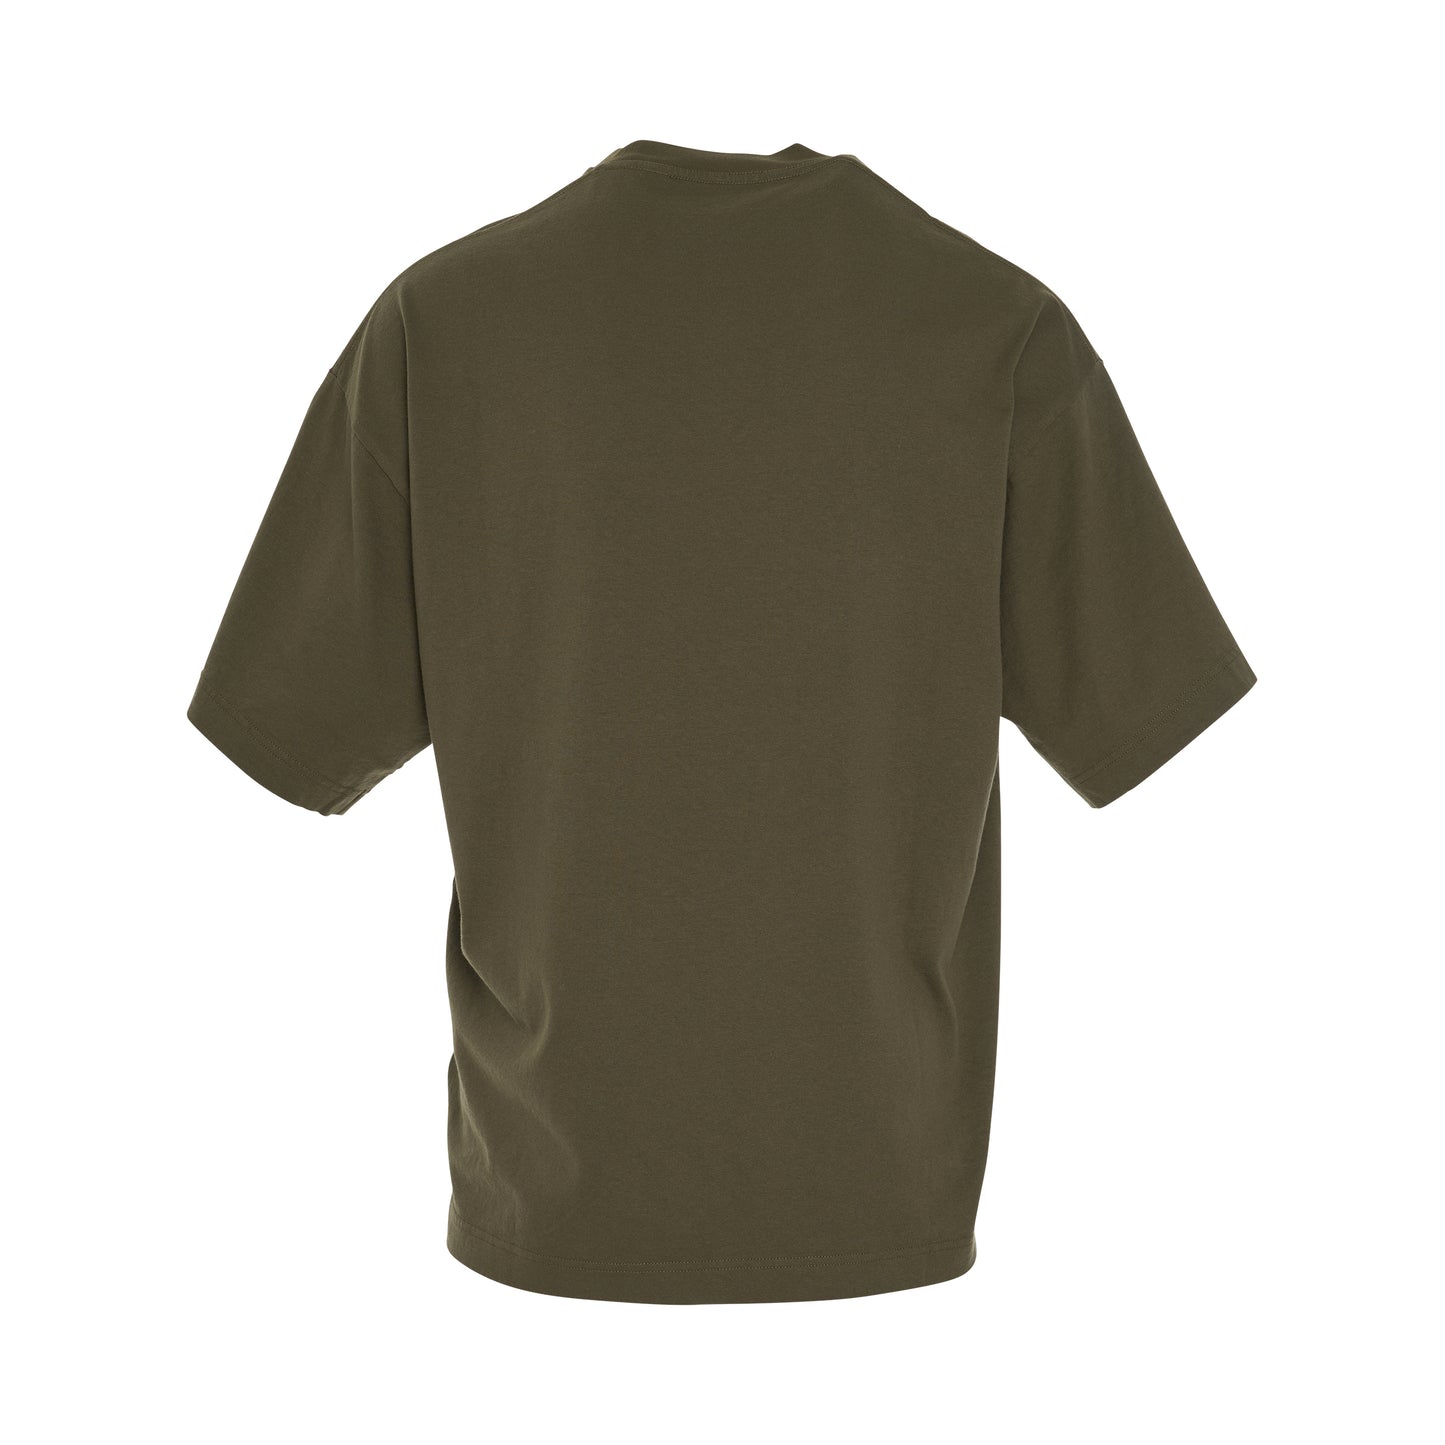 Bandana Print T-Shirt in Military